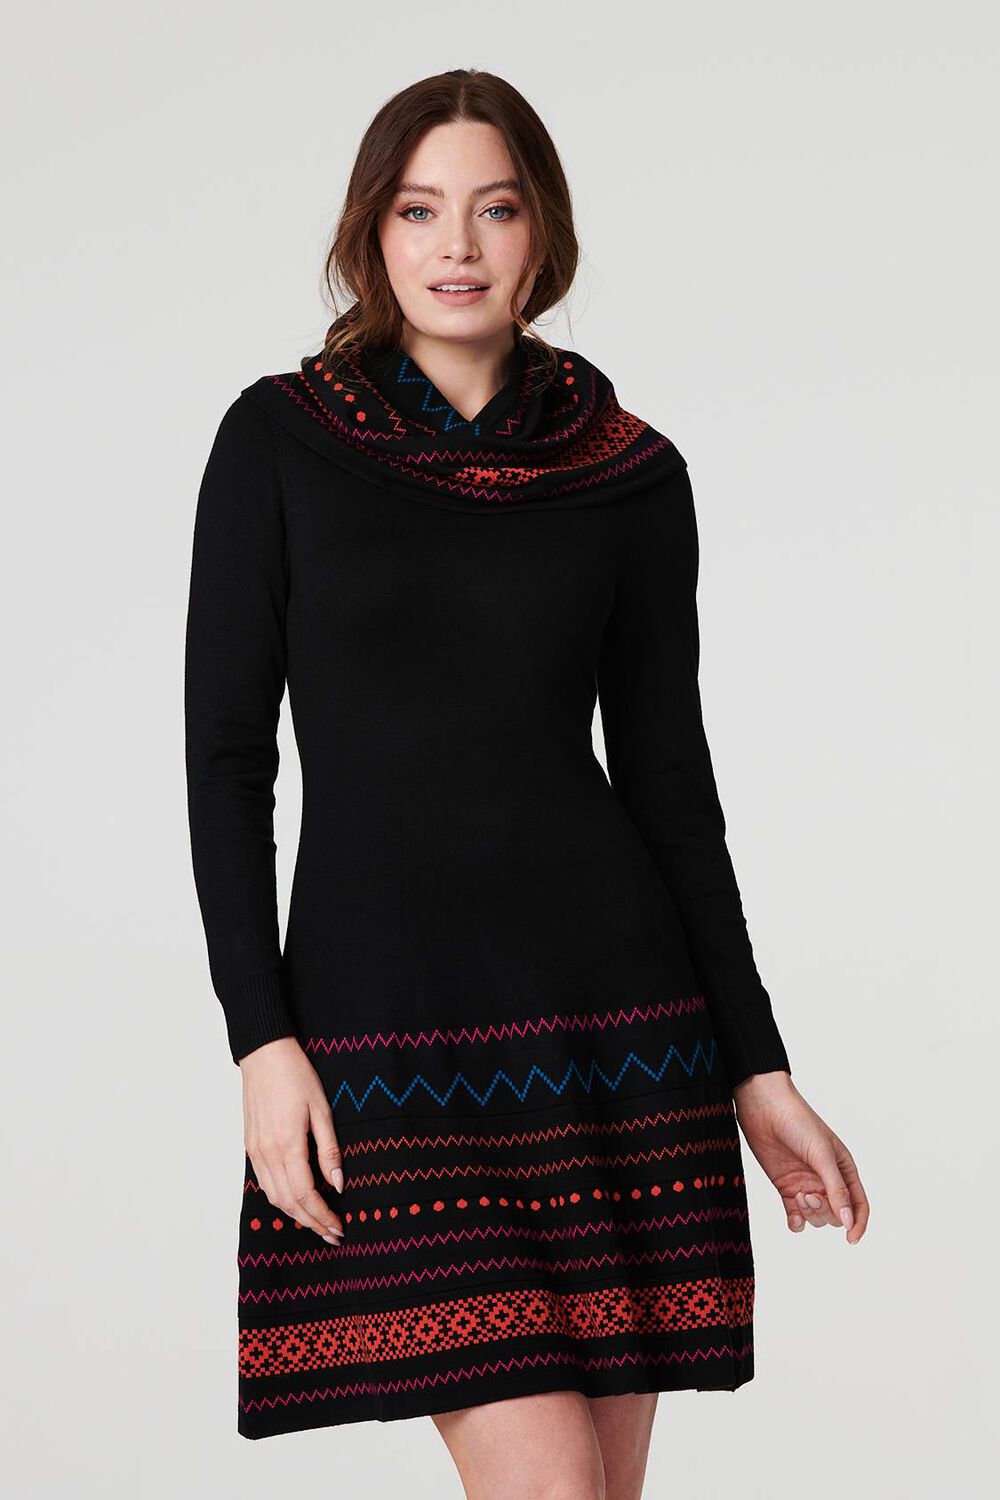 Izabel London Black - Printed Knit Skater Dress With Scarf, Size: 12